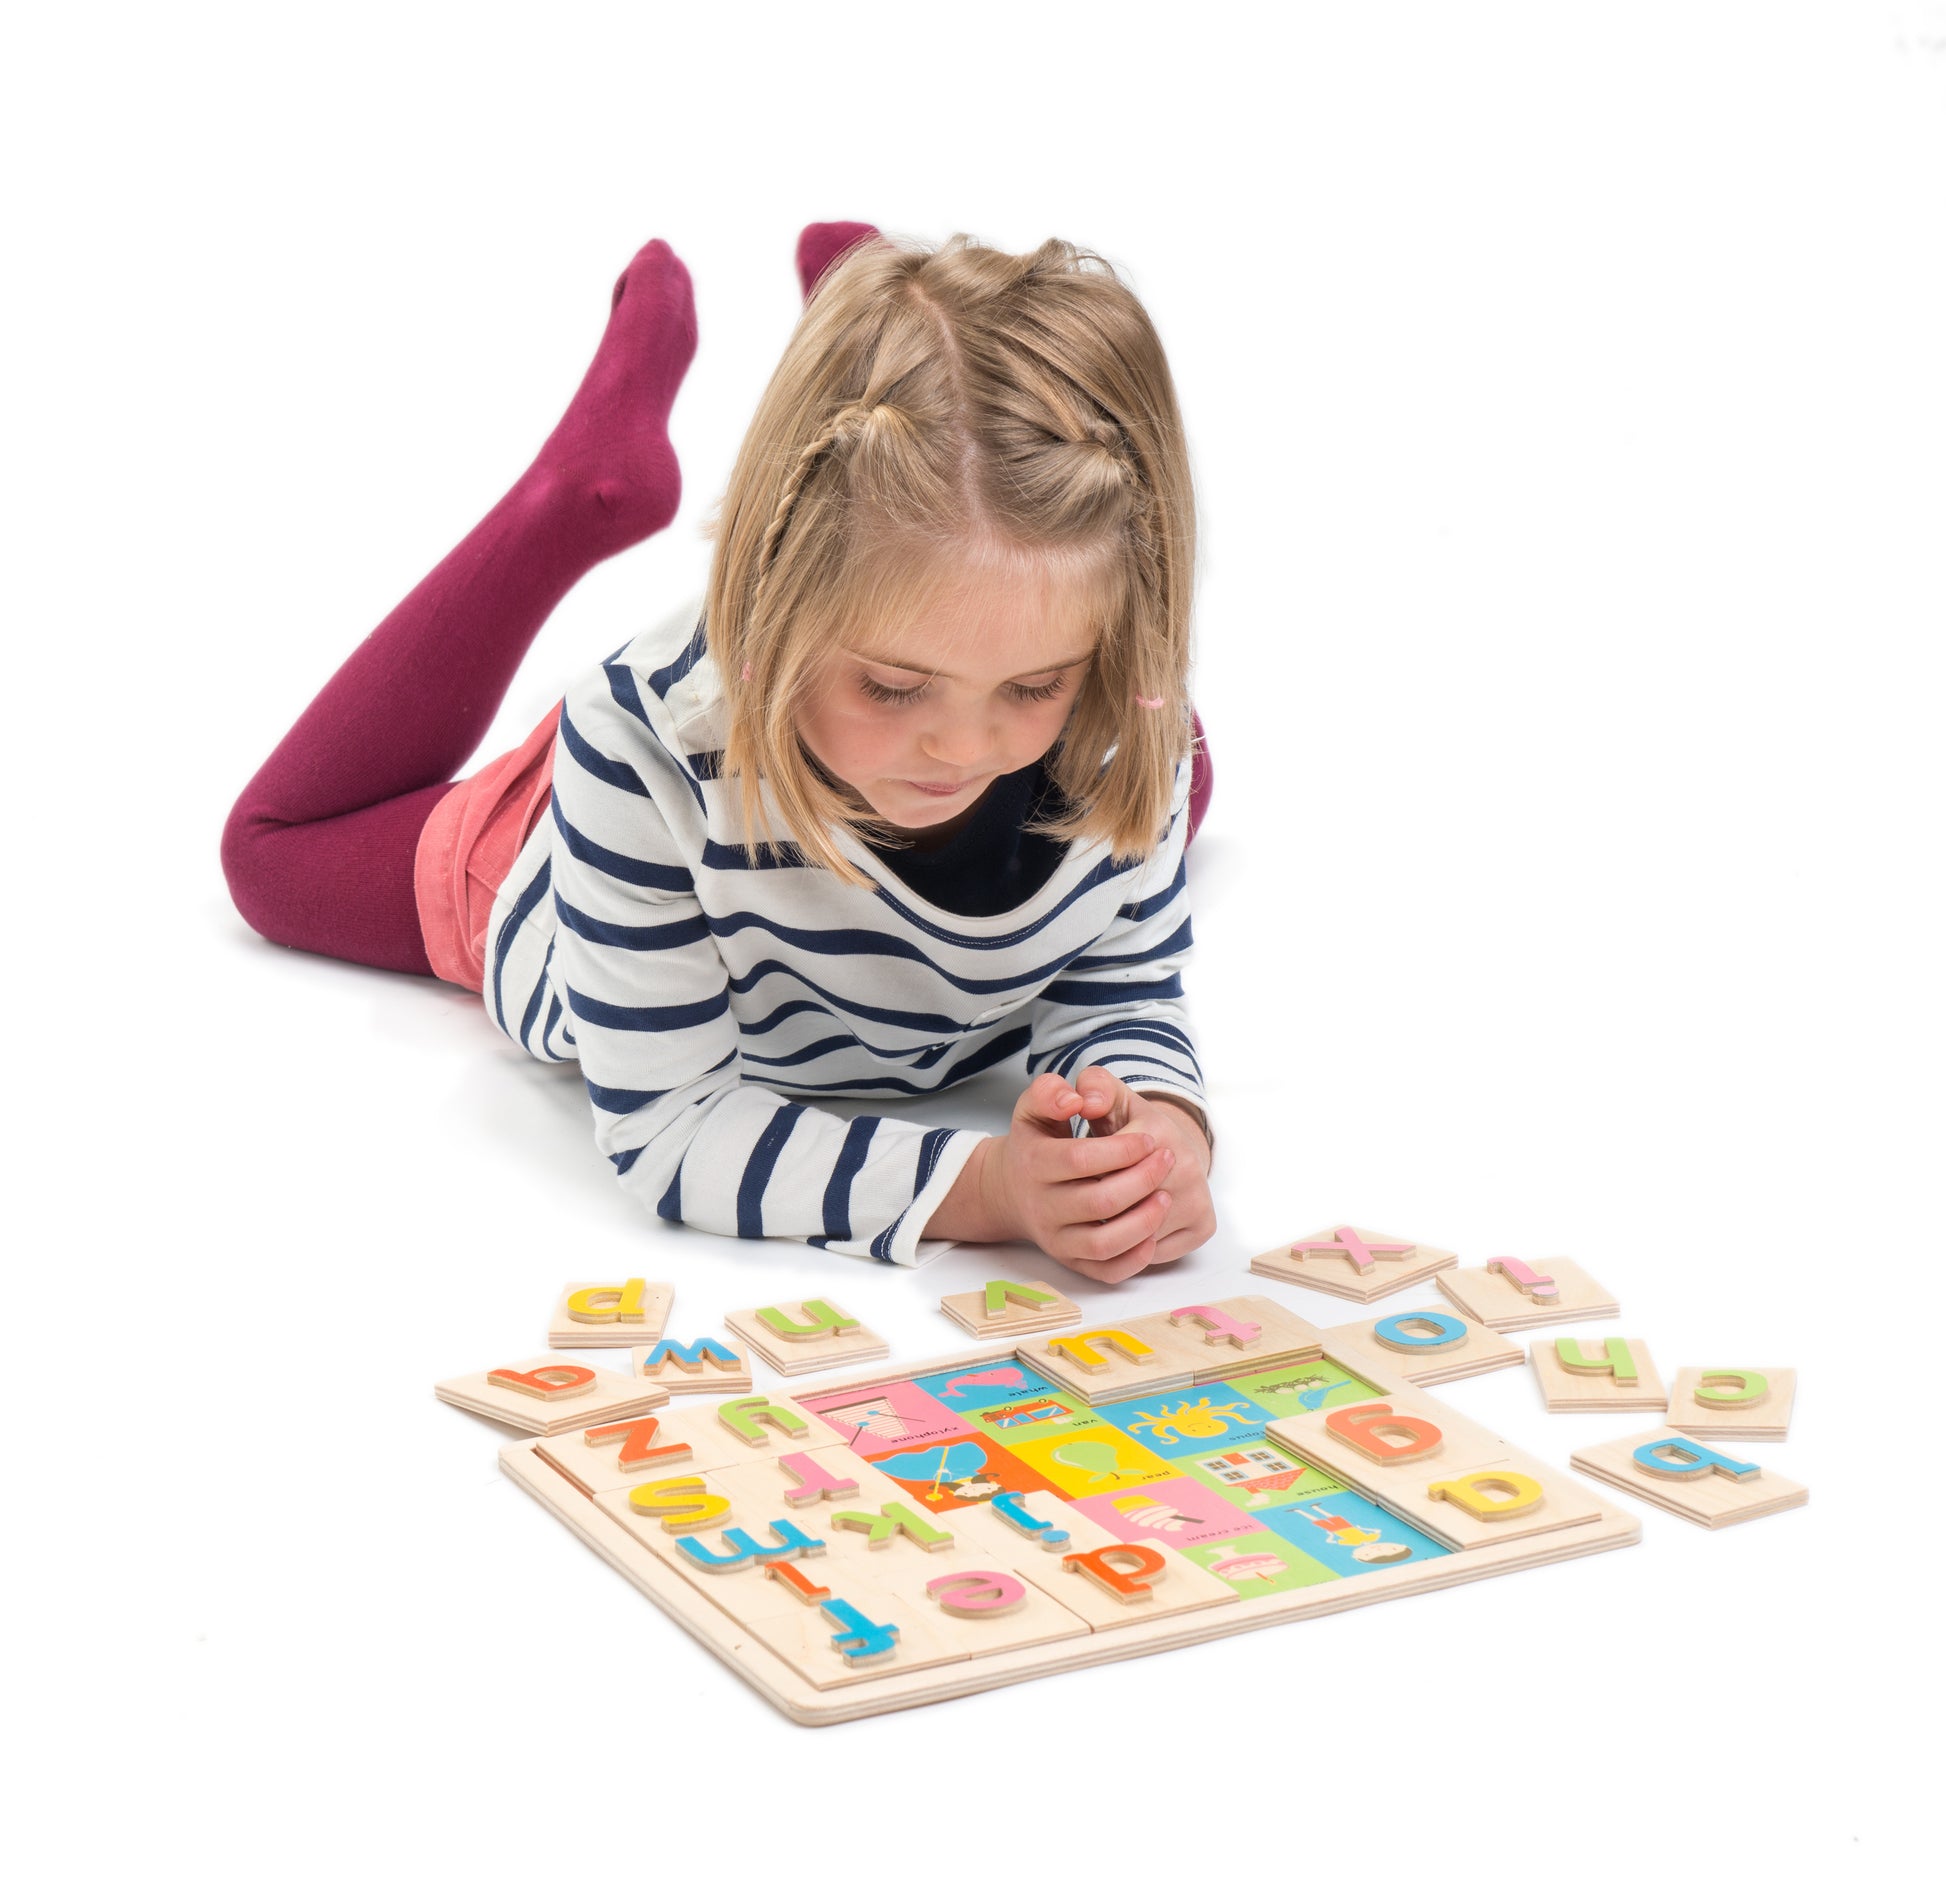 Girl building wooden alphabet puzzle